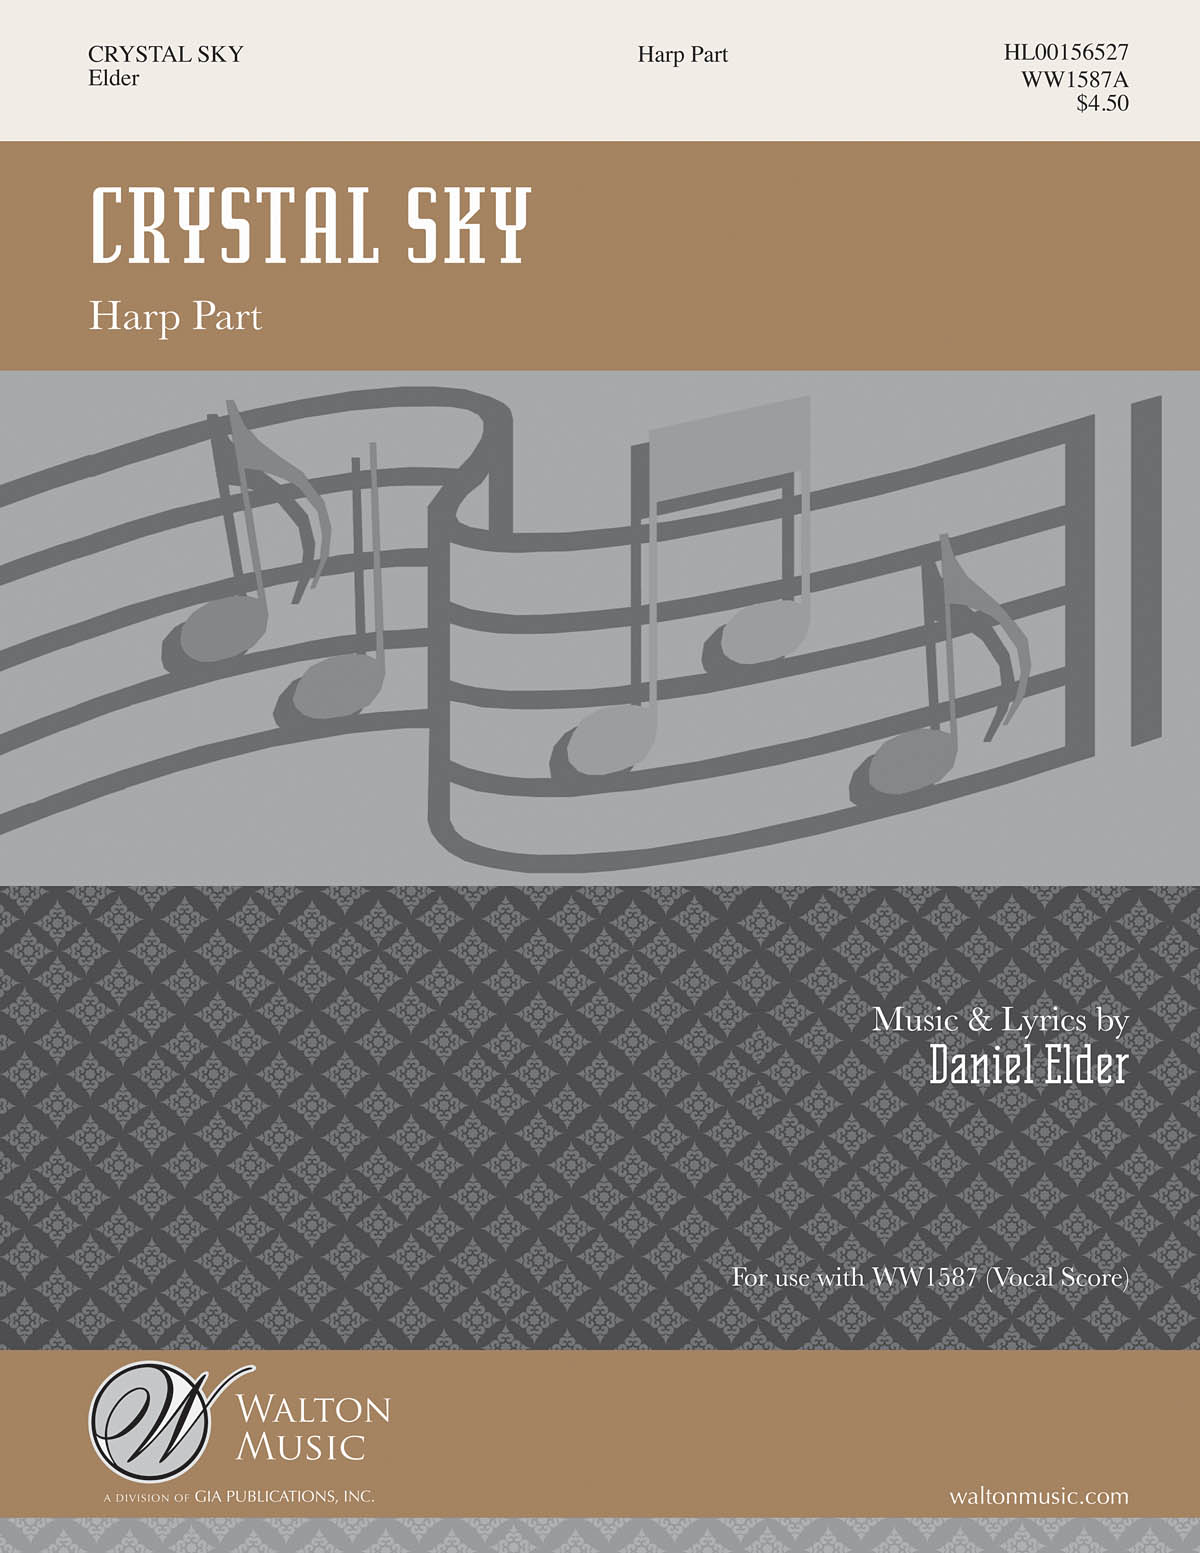 Daniel Elder: Crystal Sky - Harp Part: Upper Voices and Accomp.: Part